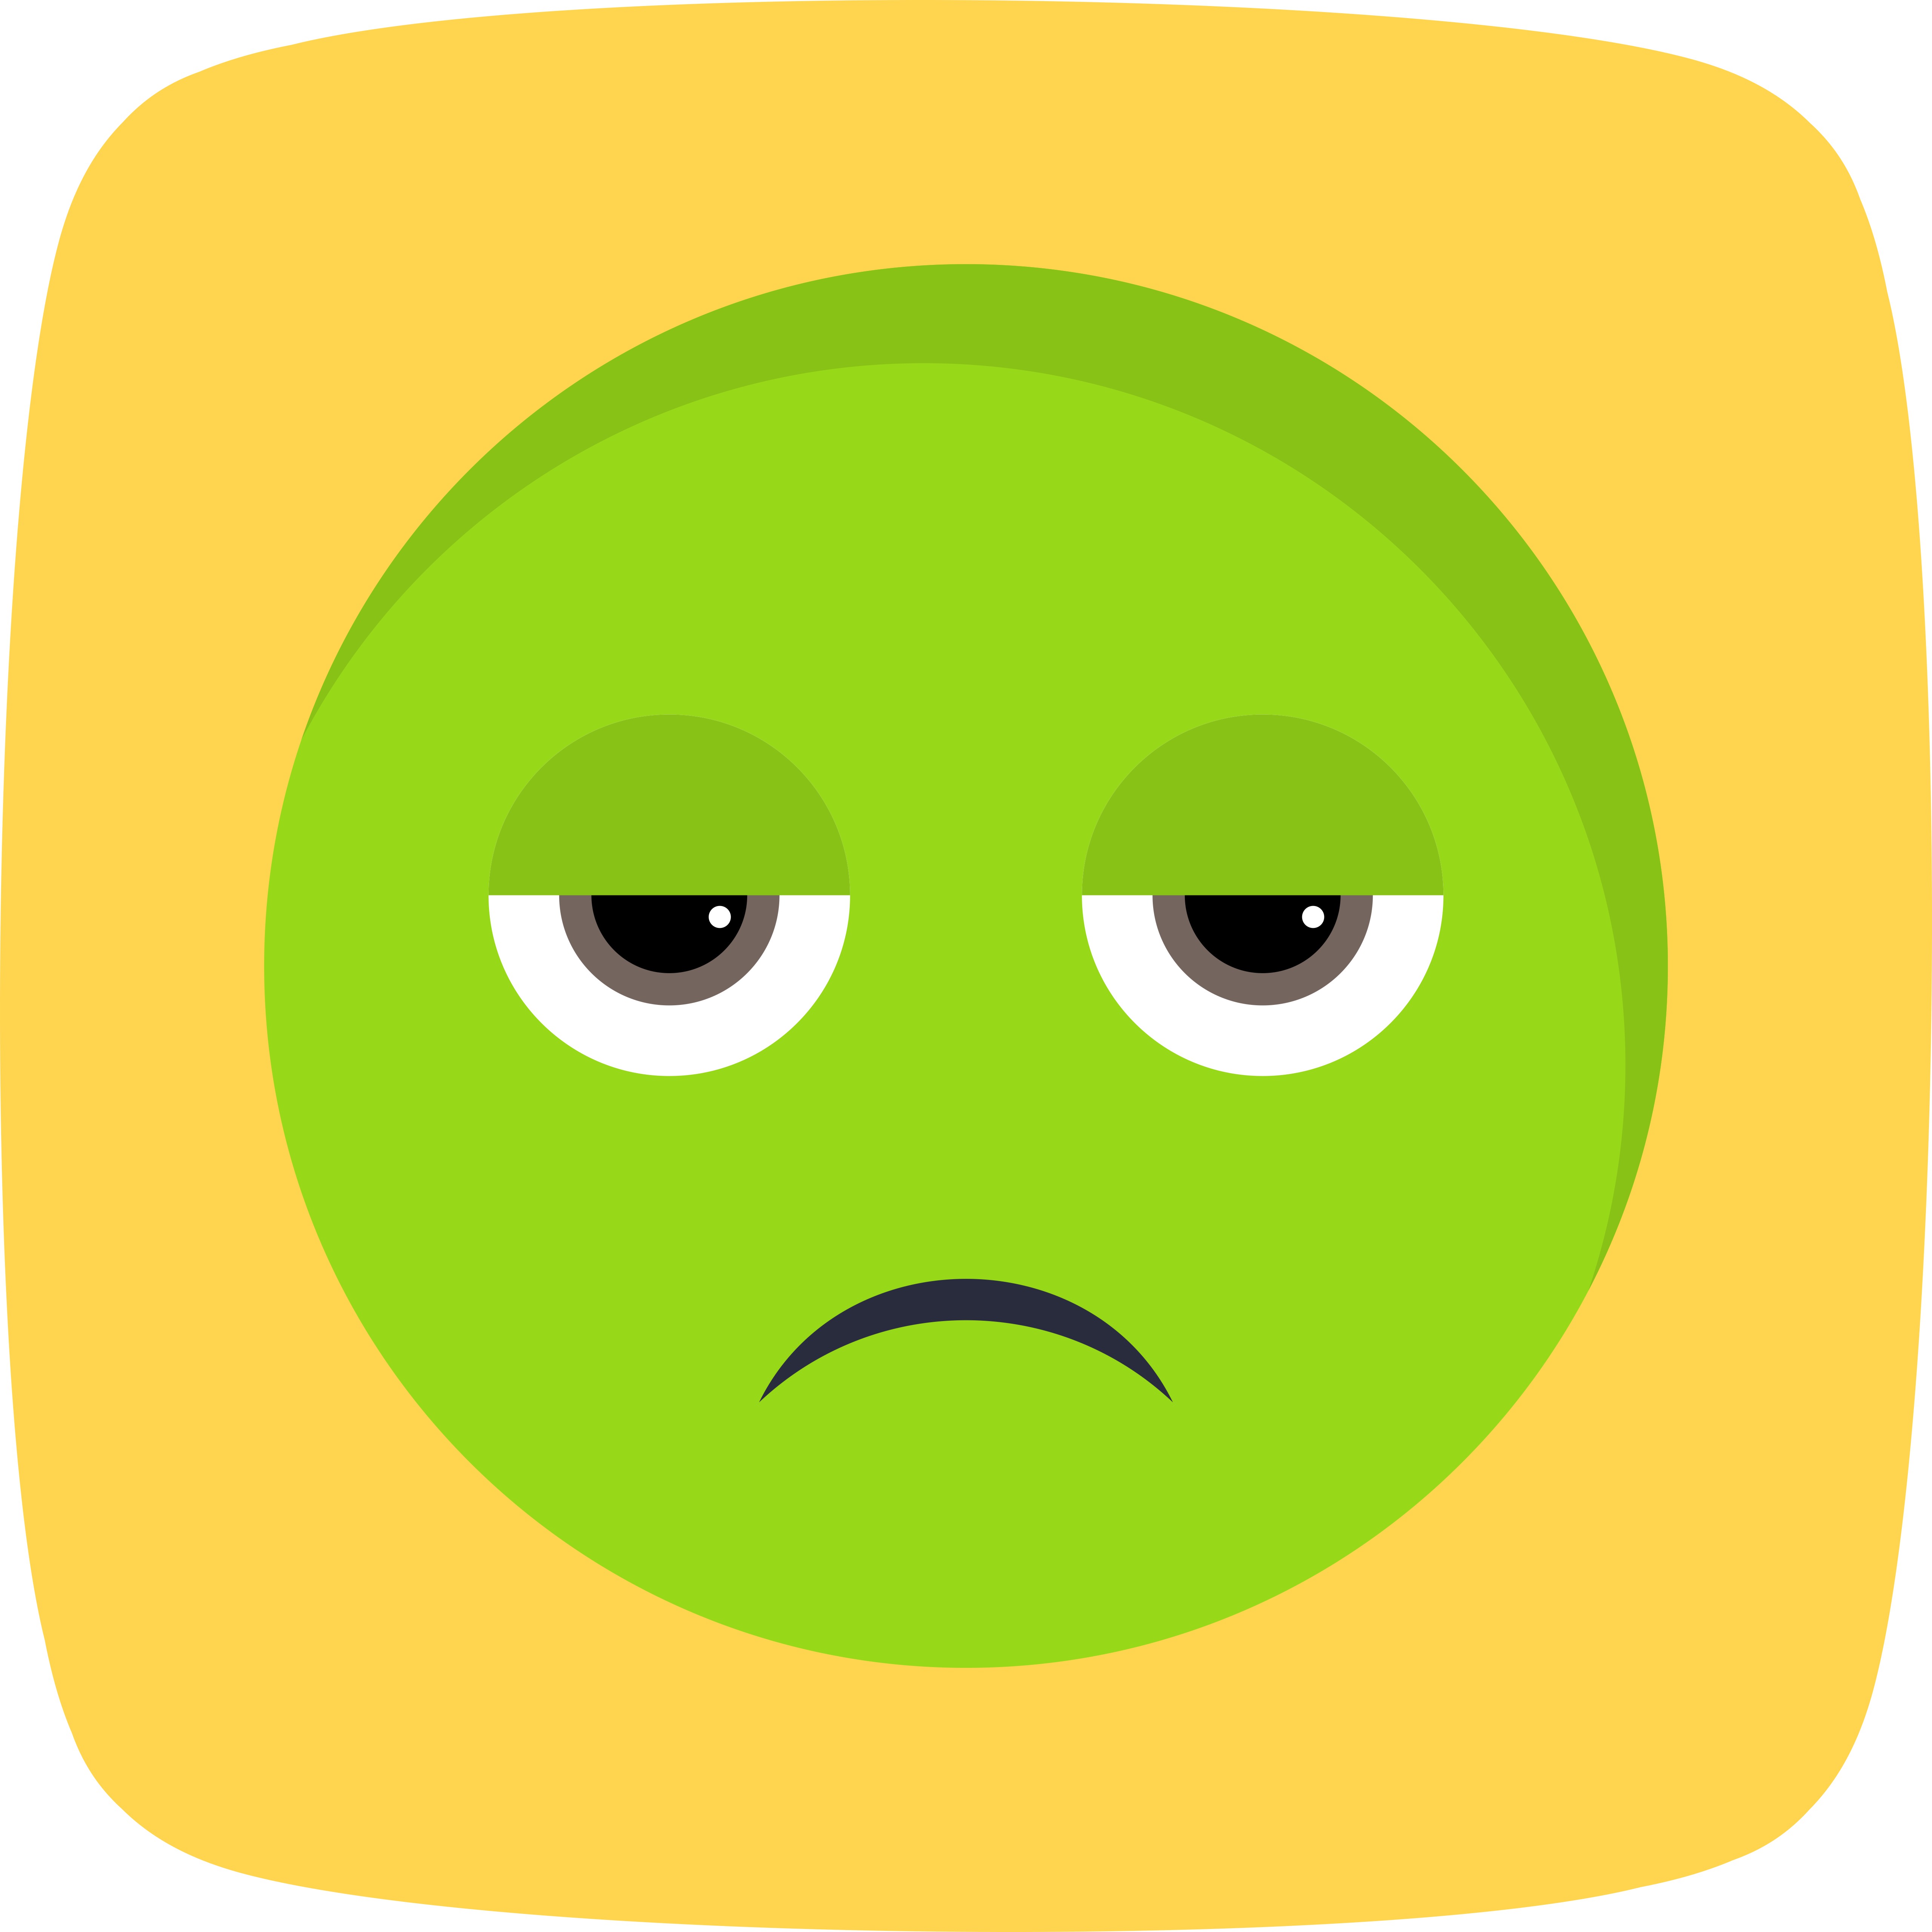 Sick Emoji Vector Icon - Download Free Vectors, Clipart Graphics & Vector Art